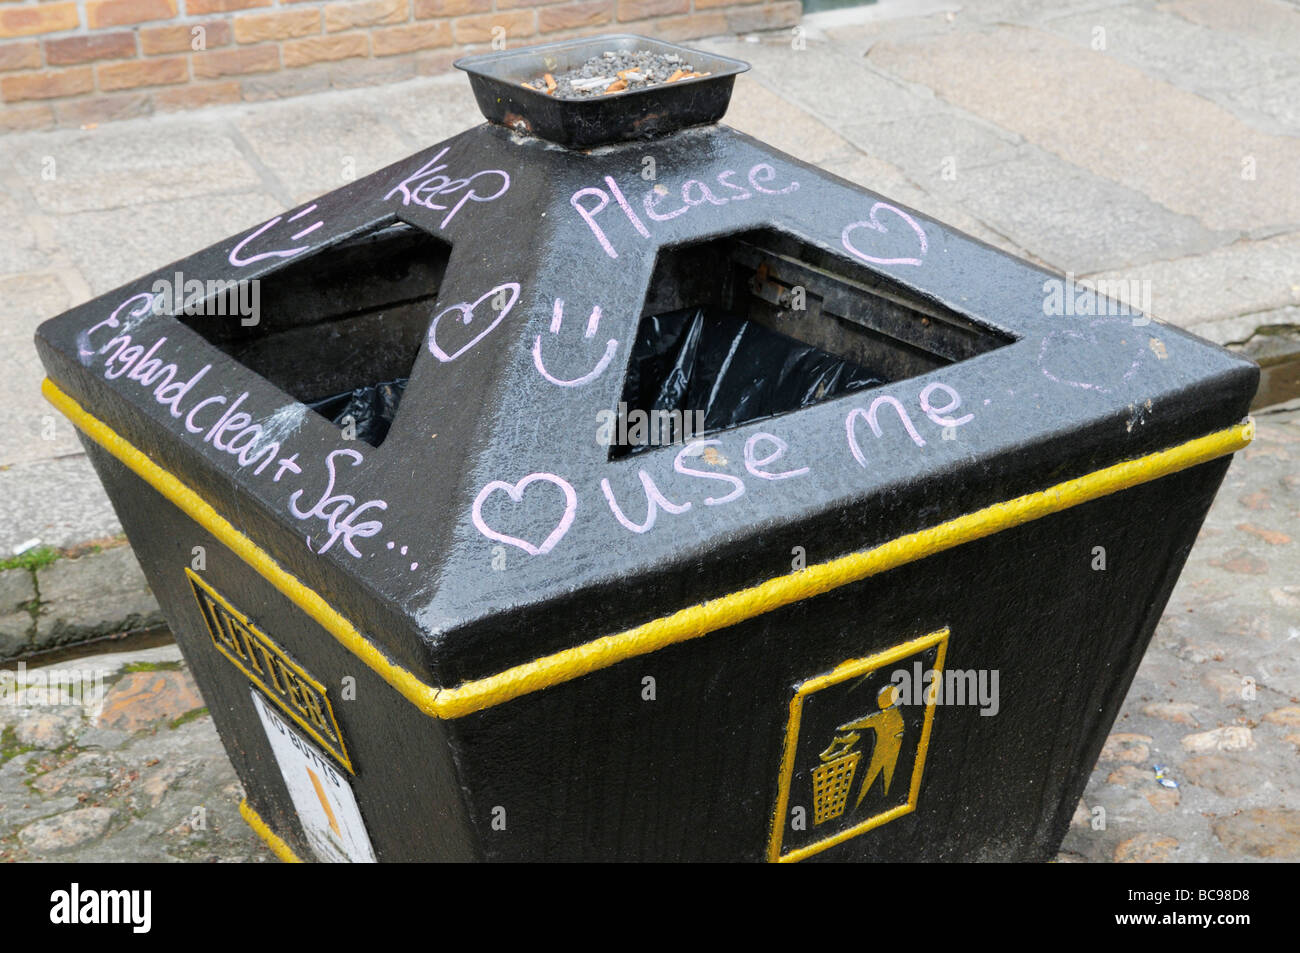 Papelera públicos cubiertos de graffiti mensaje Foto de stock